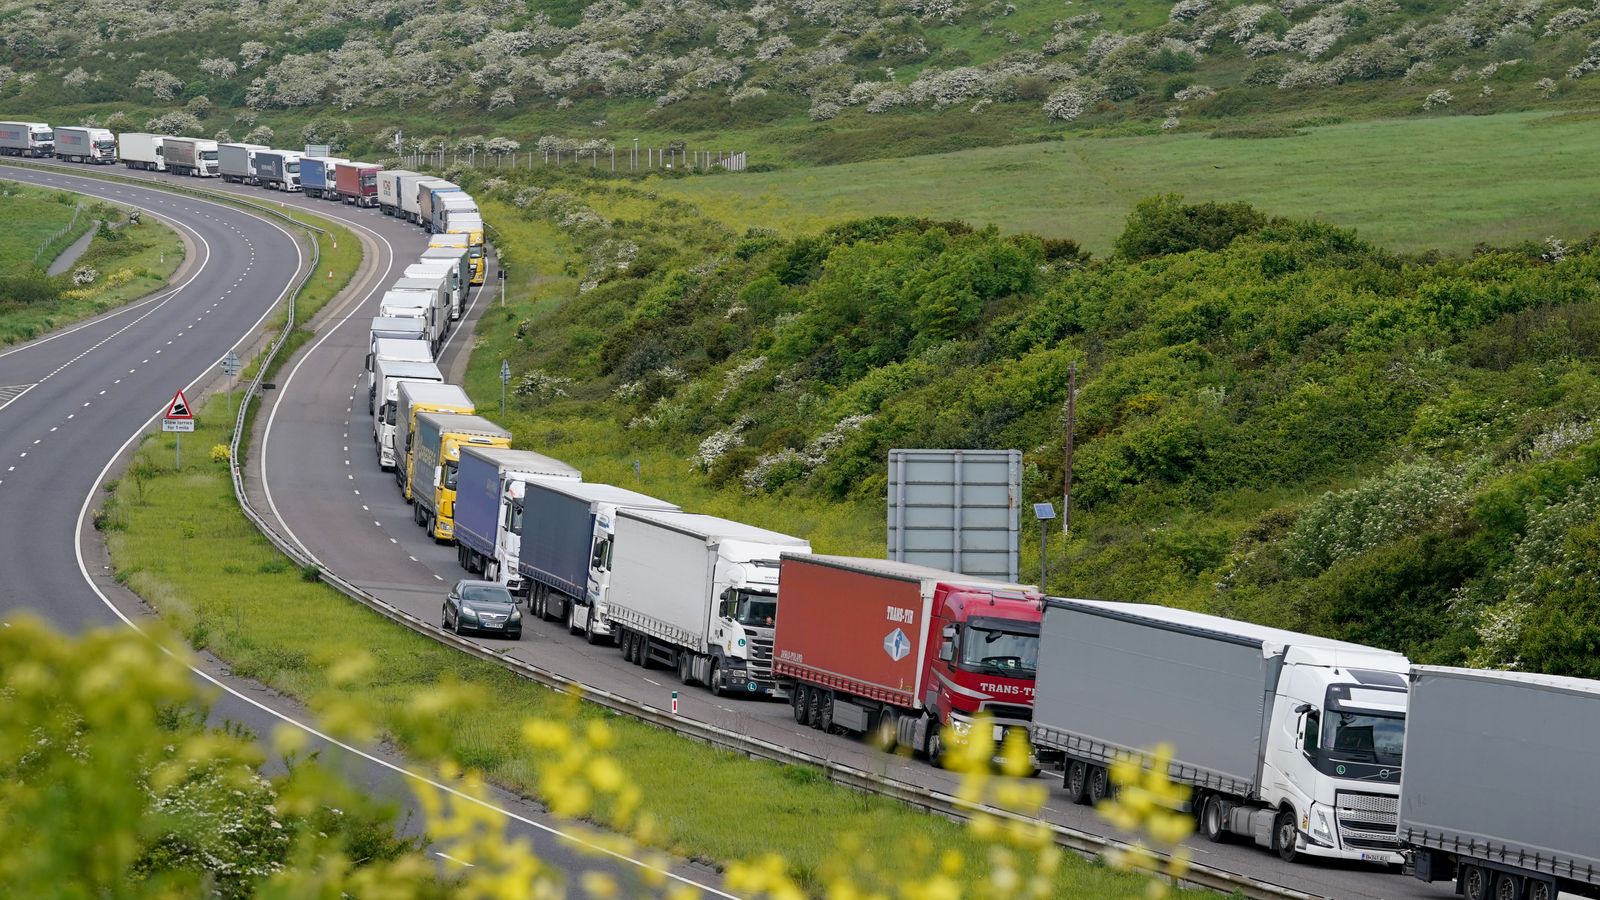 UK Government Approves Longer Lorries on Roads, Despite Safety Concerns